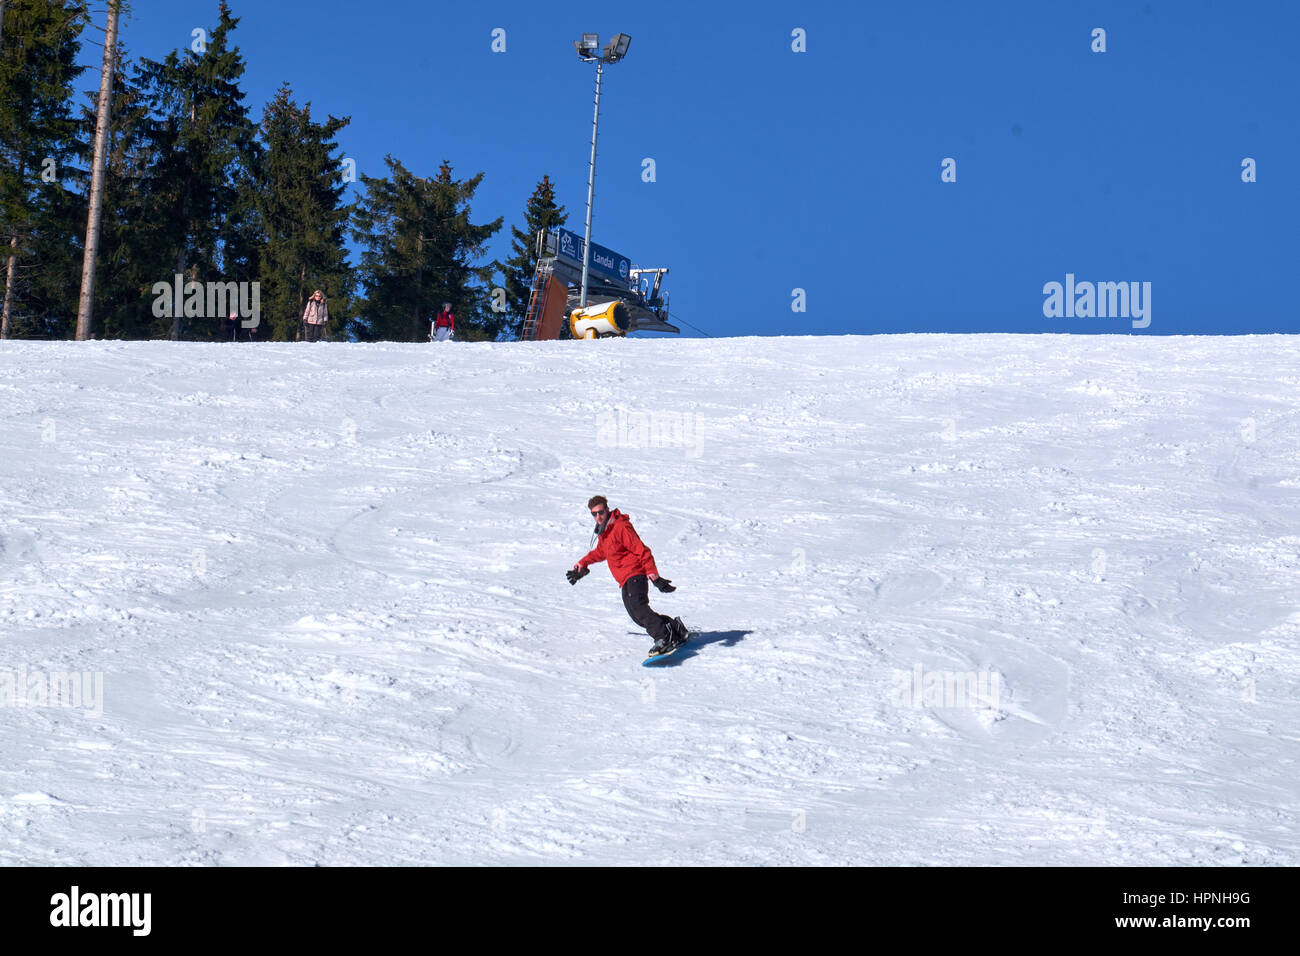 WINTERBERG, GERMANY - FEBRUARY 15, 2017: Man on snowboard on his way down a piste at Ski Carousel Winterberg Stock Photo